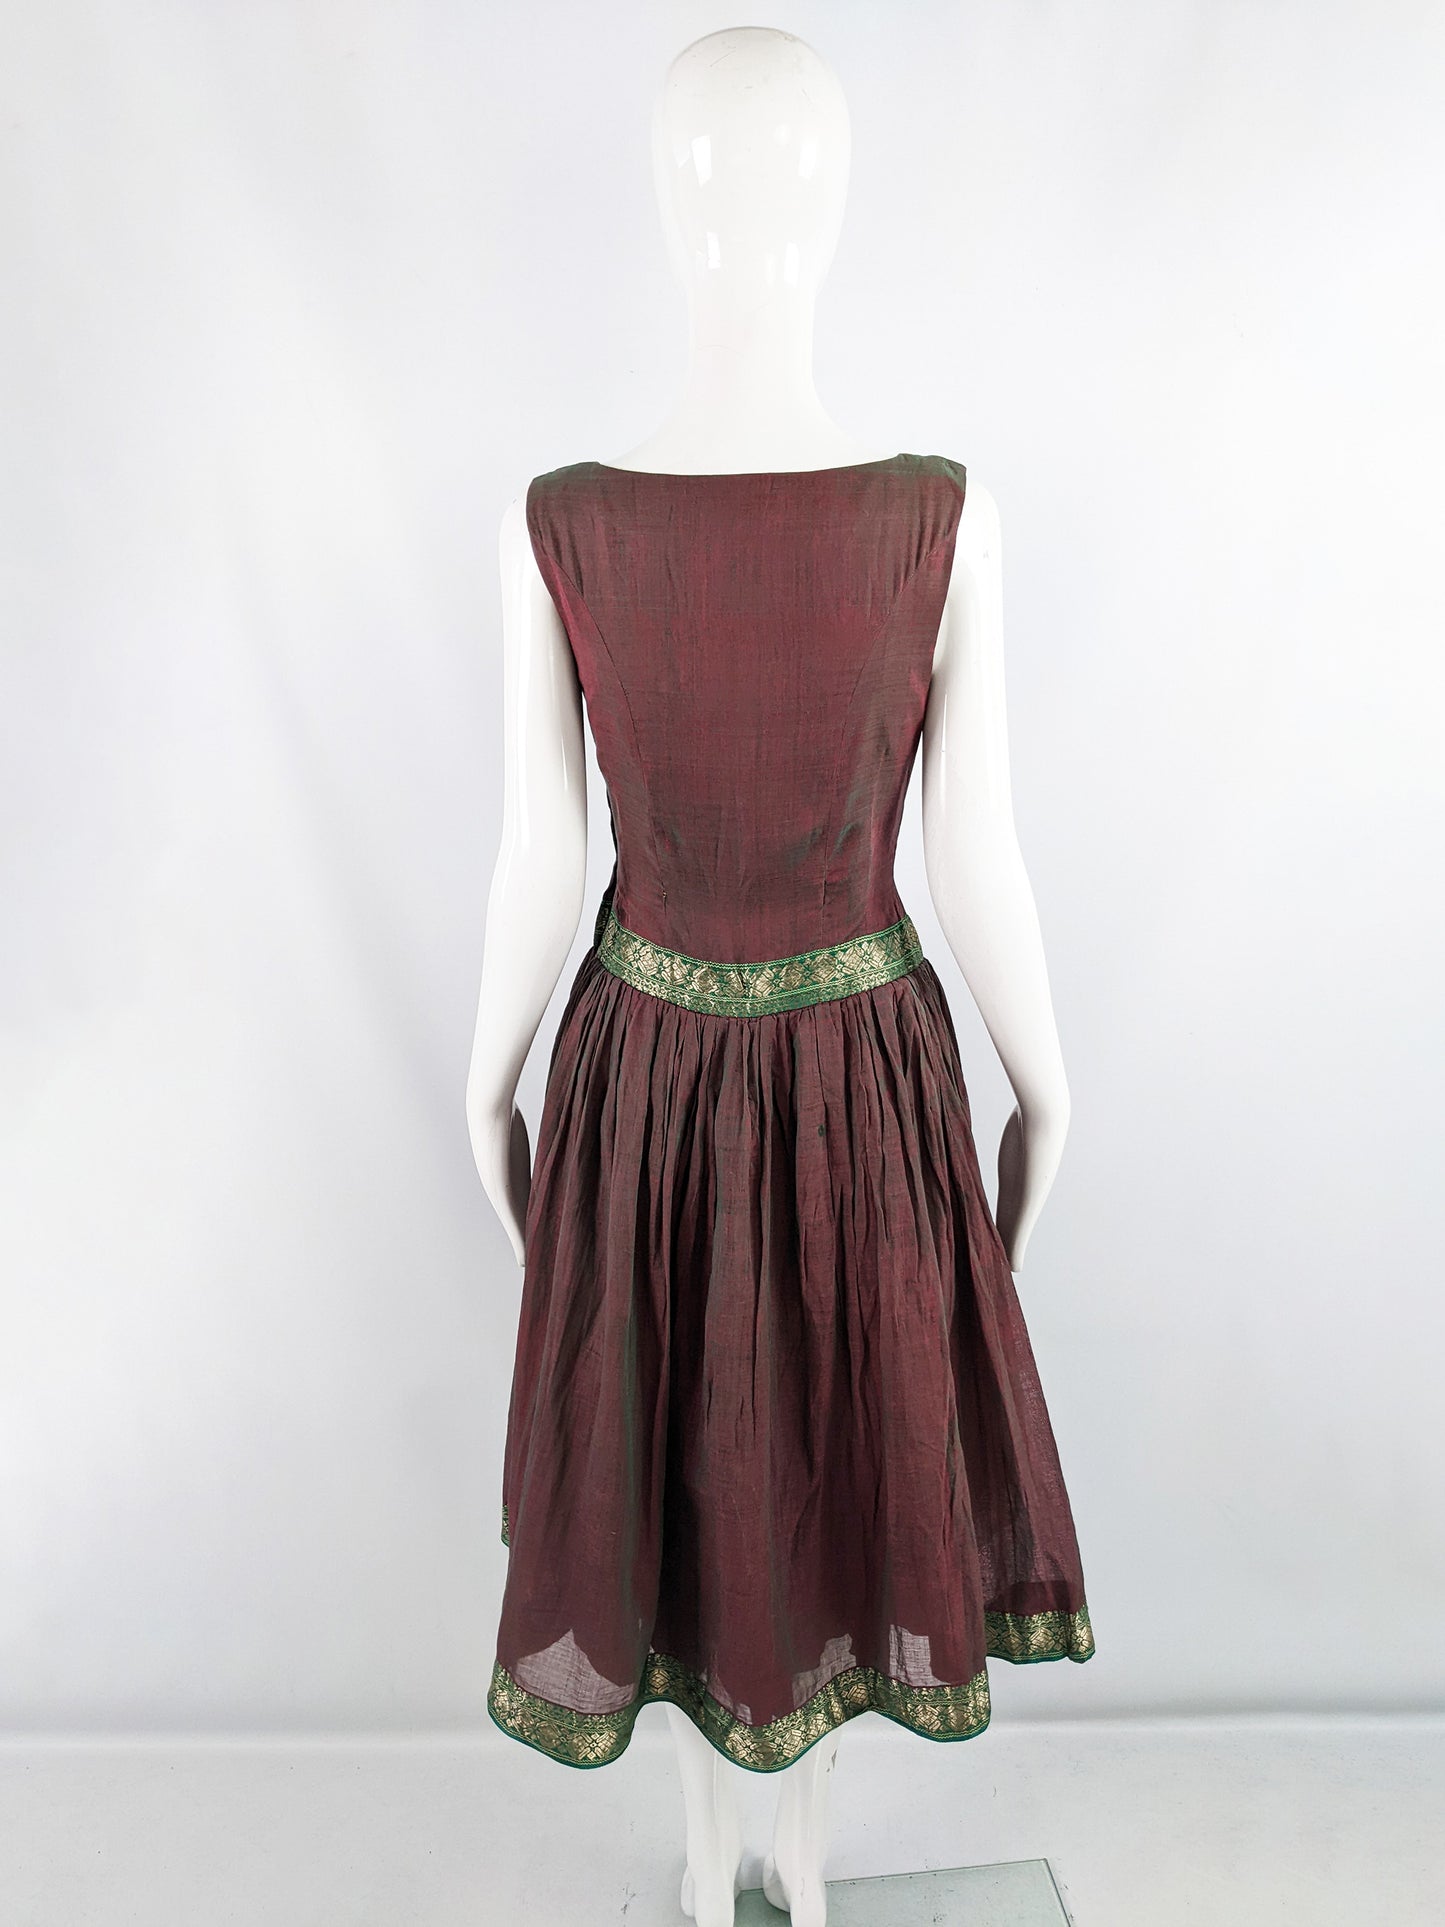 Vintage 1950s Asian Iridescent Brocade Trim Dress